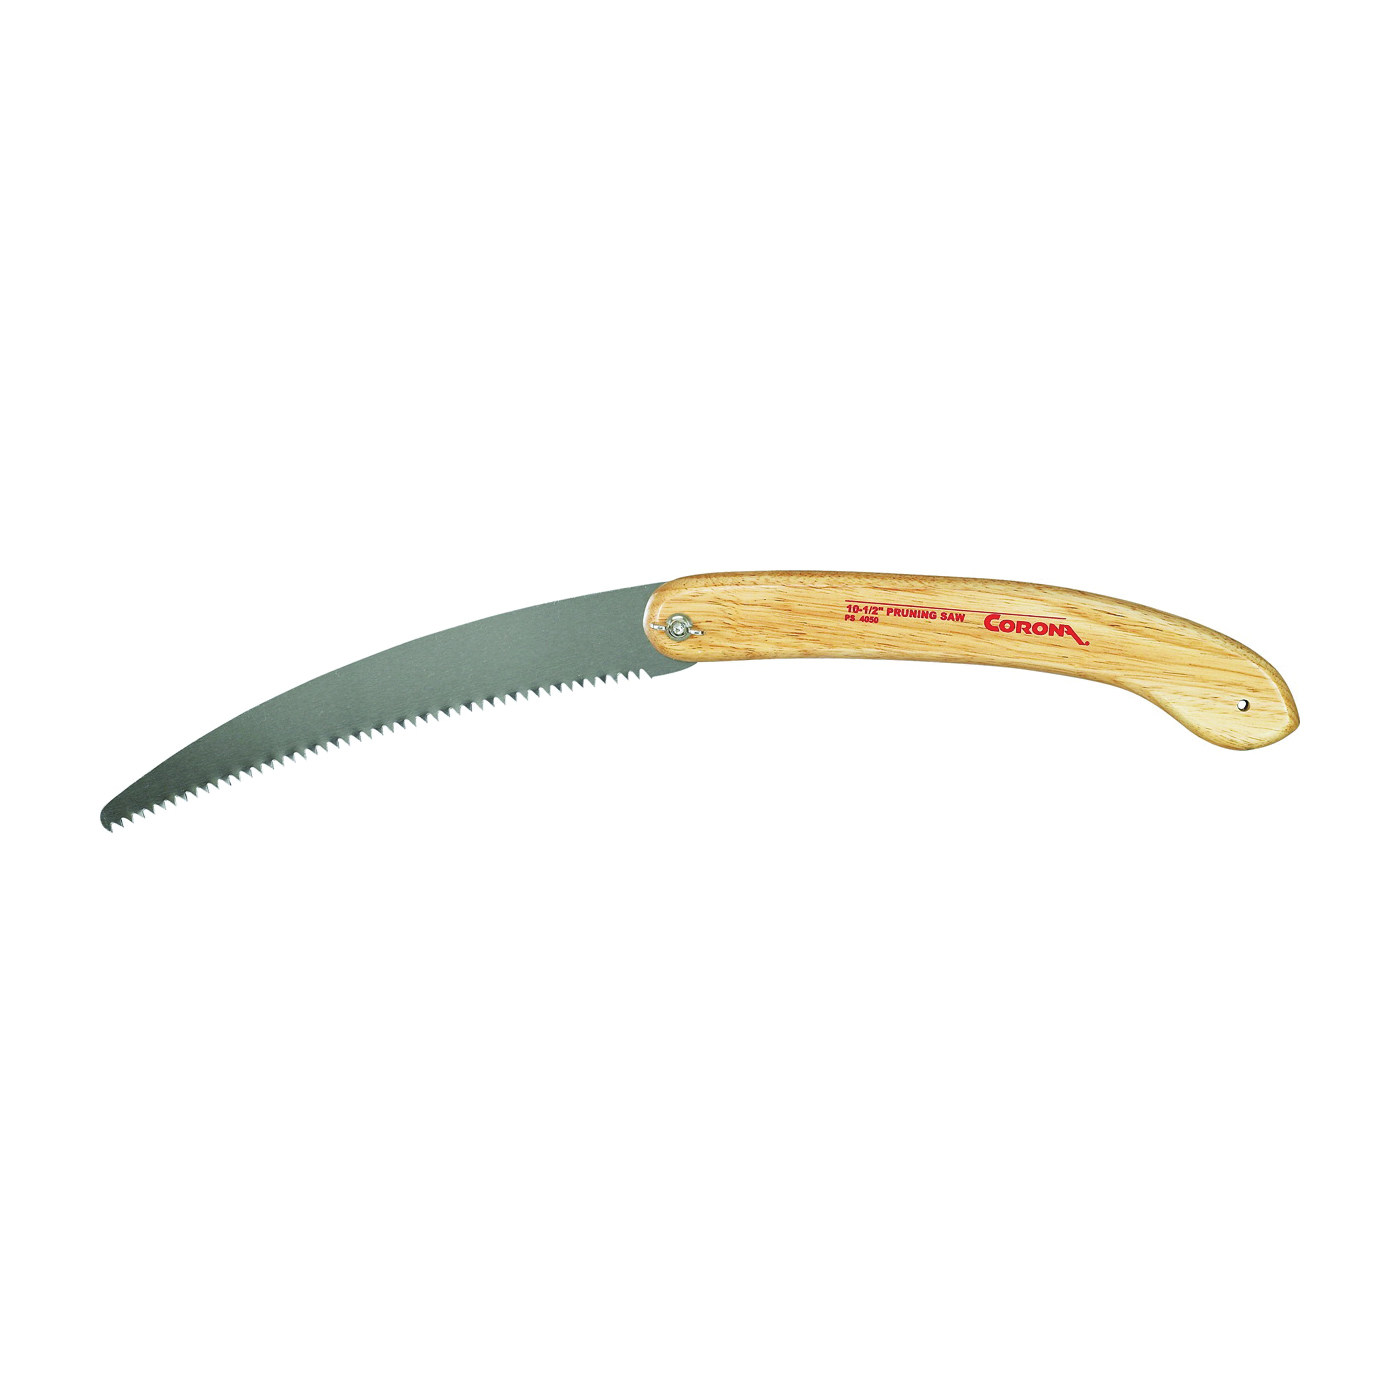 PS 4050 Pruning Saw, Steel Blade, 6 TPI, Hardwood Handle